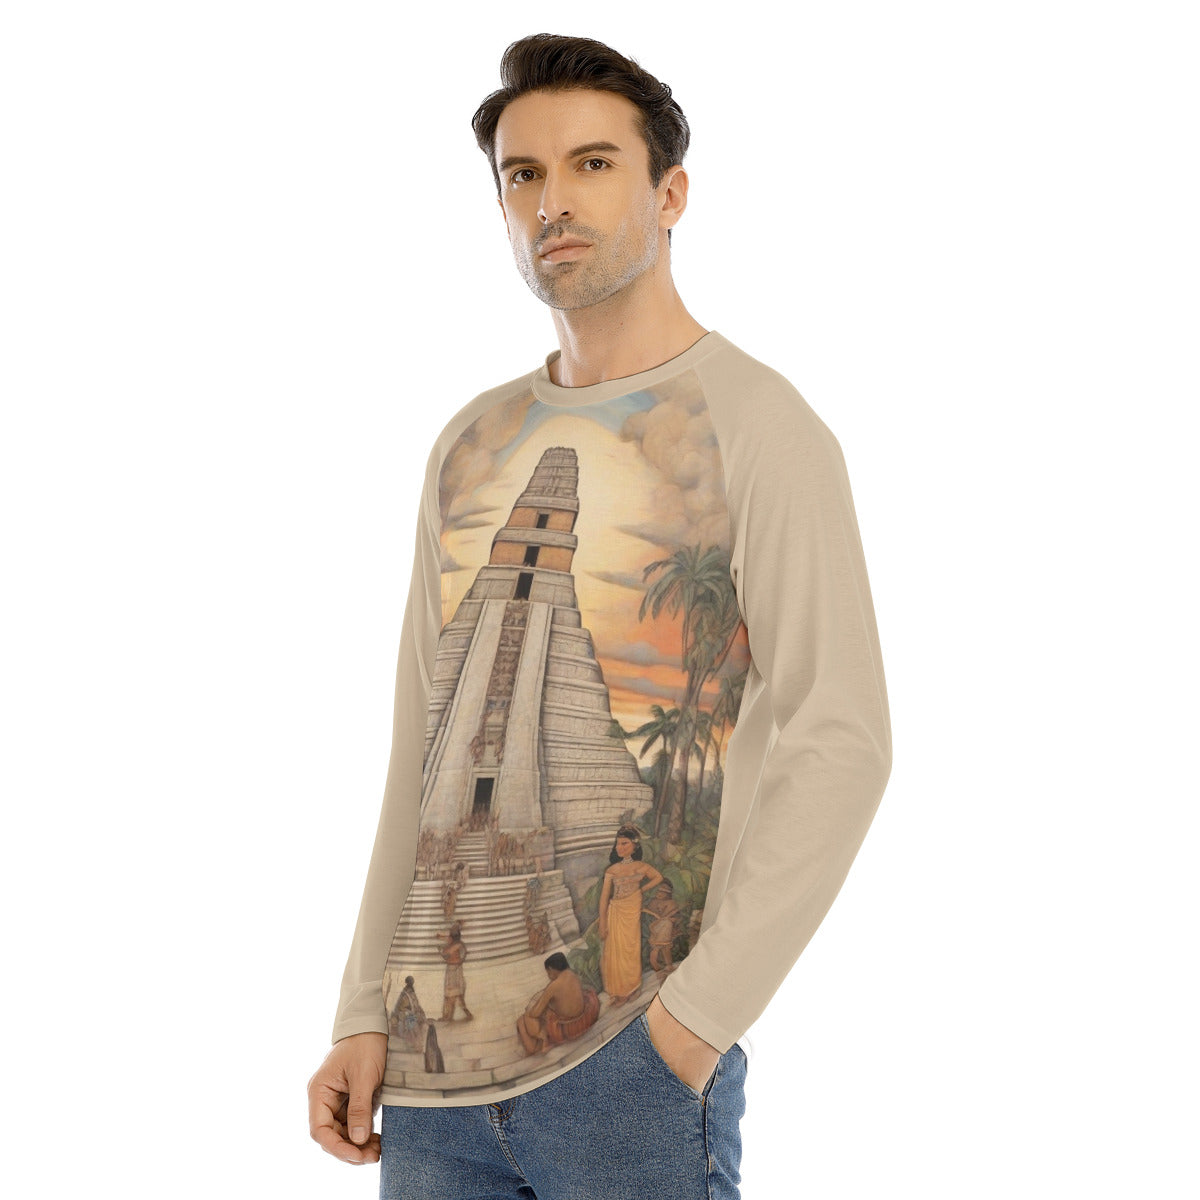 Chichen Itza 103 -- Men's Long Sleeve T-shirt With Raglan Sleeve